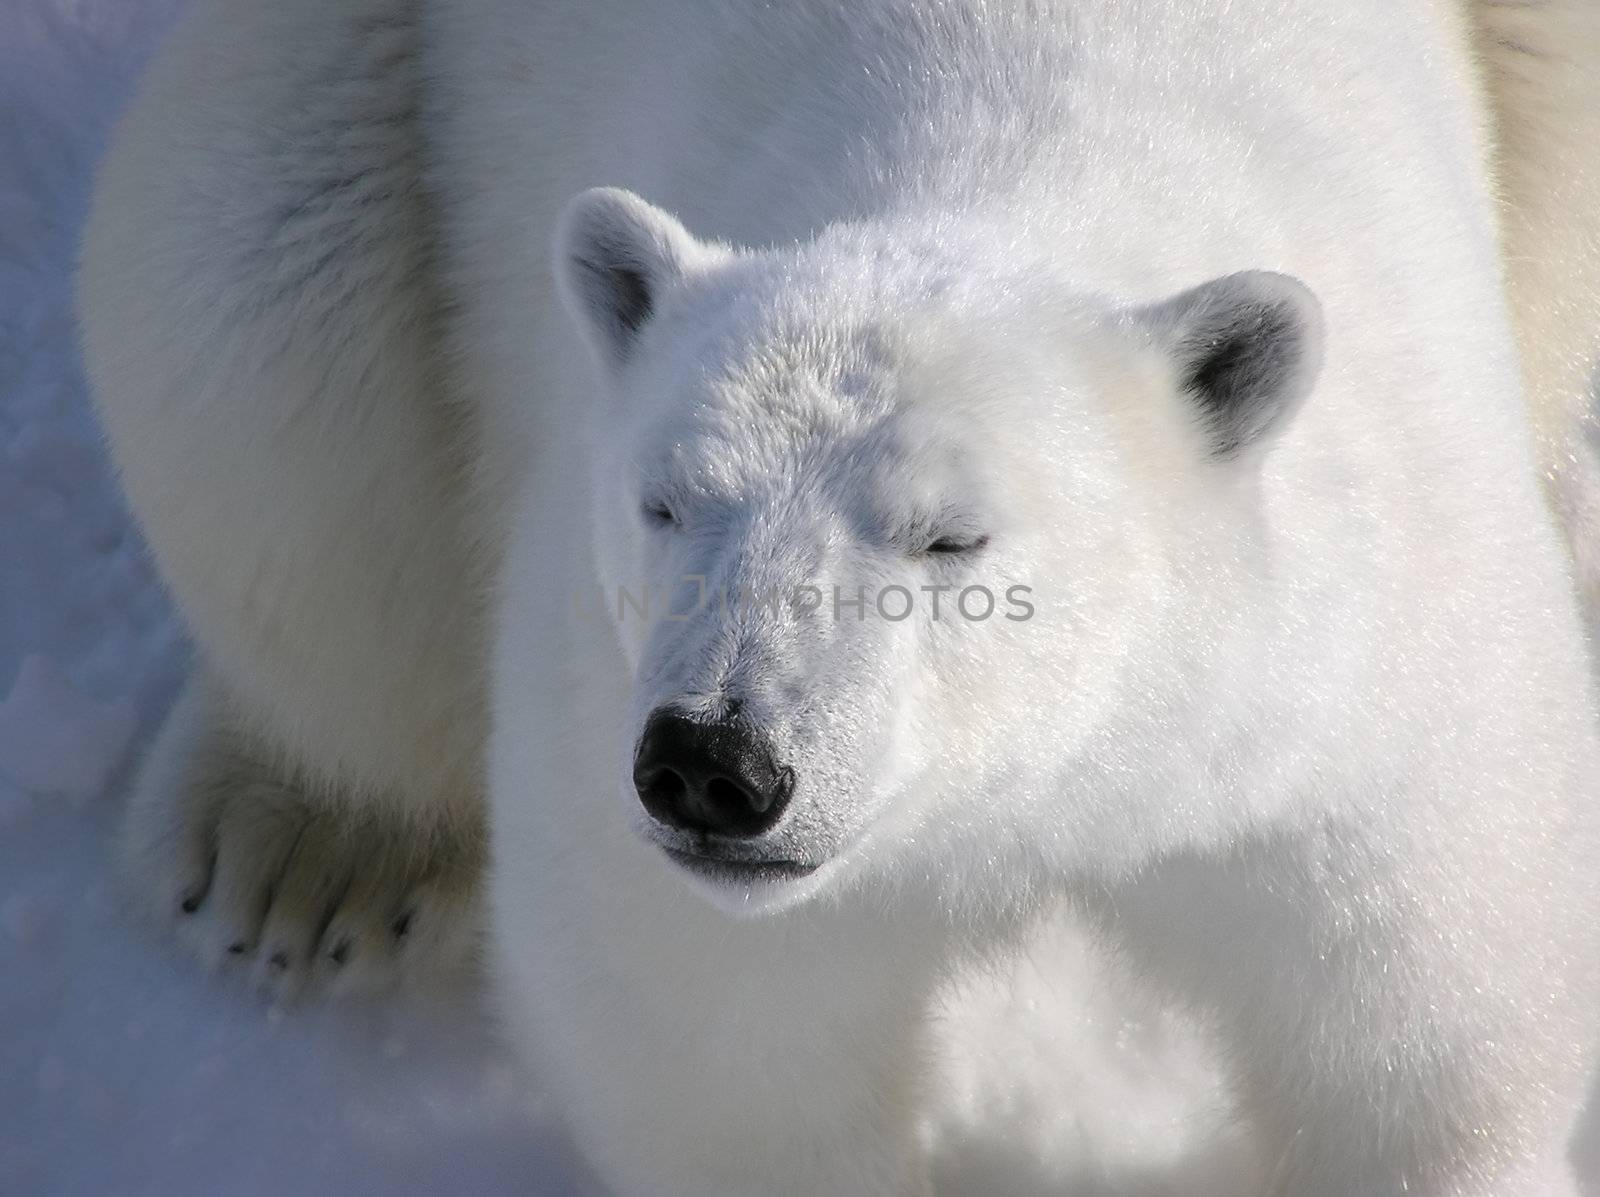 Polar bear resting peacefully at dawn by Mirage3